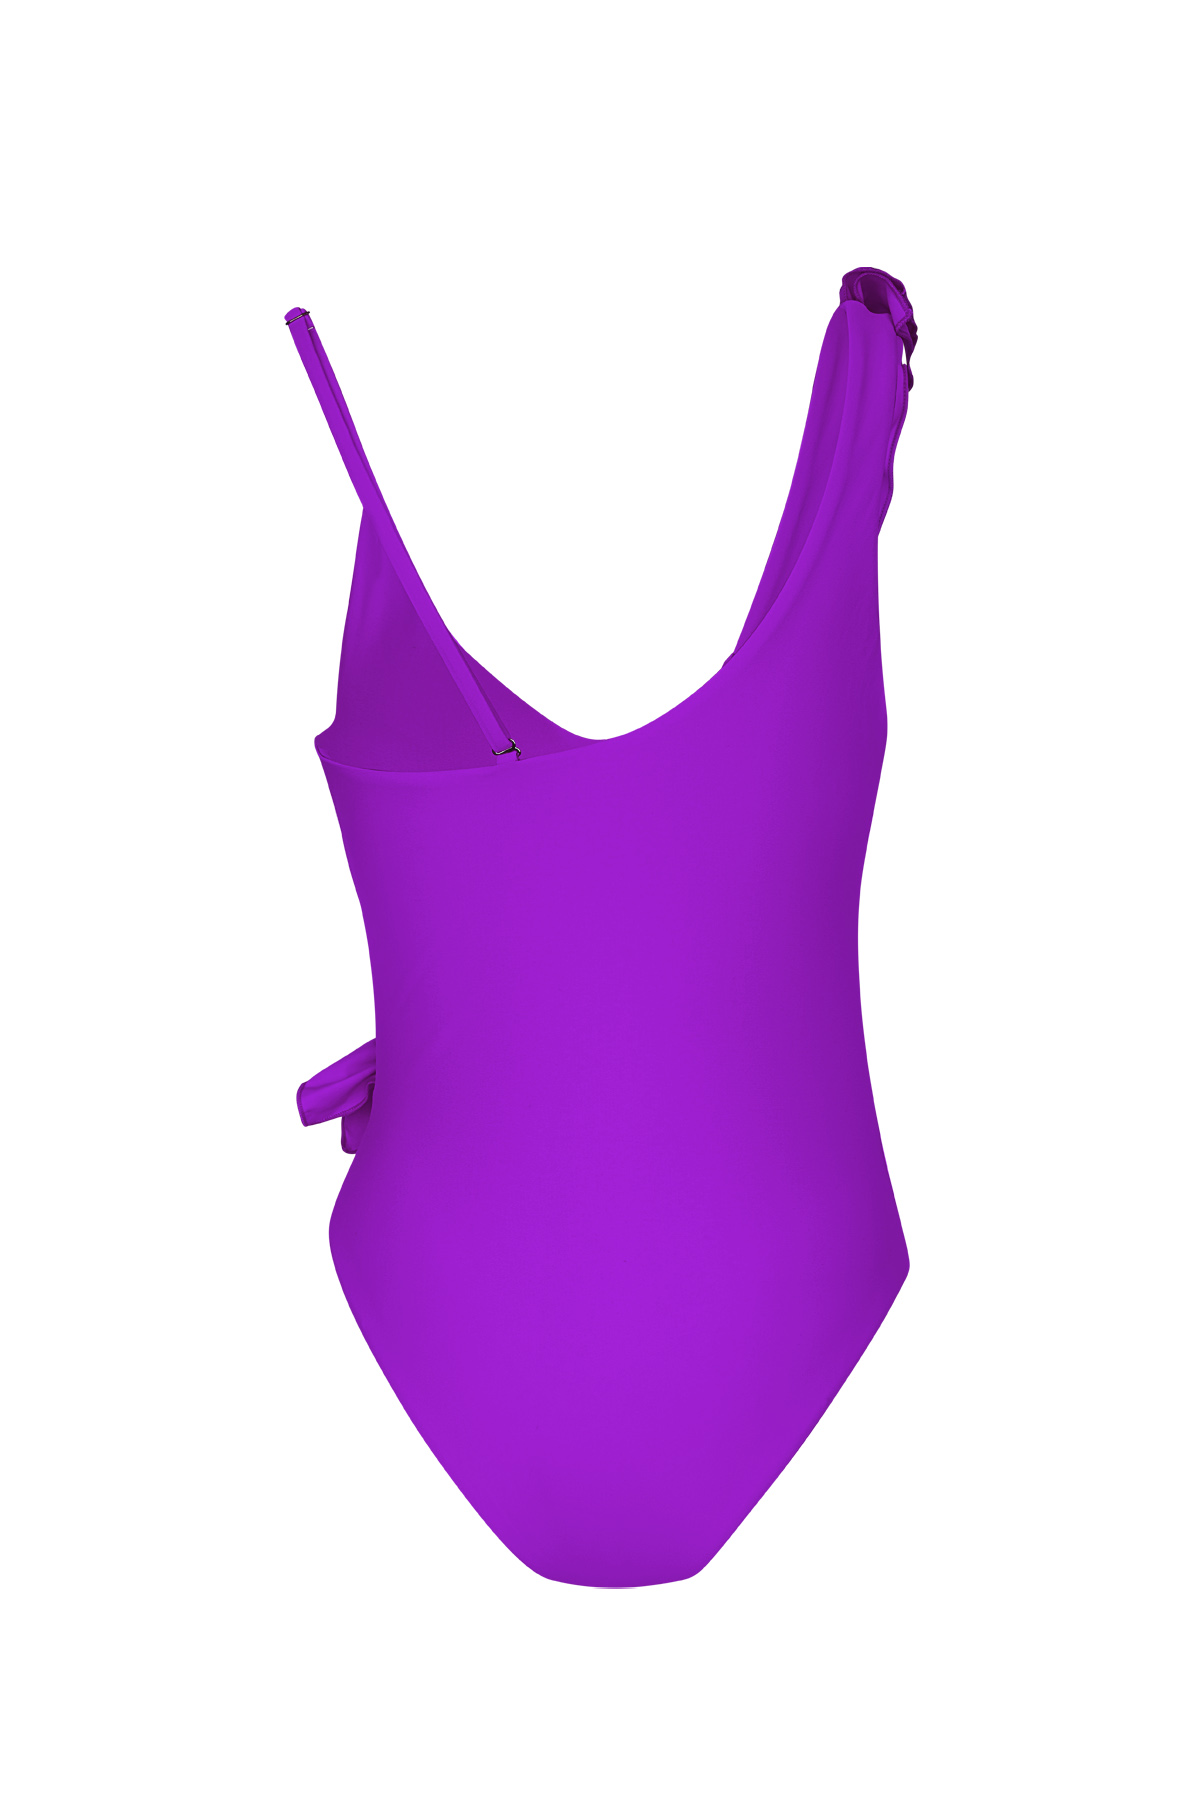 Swimsuit ruffle - purple L Picture6